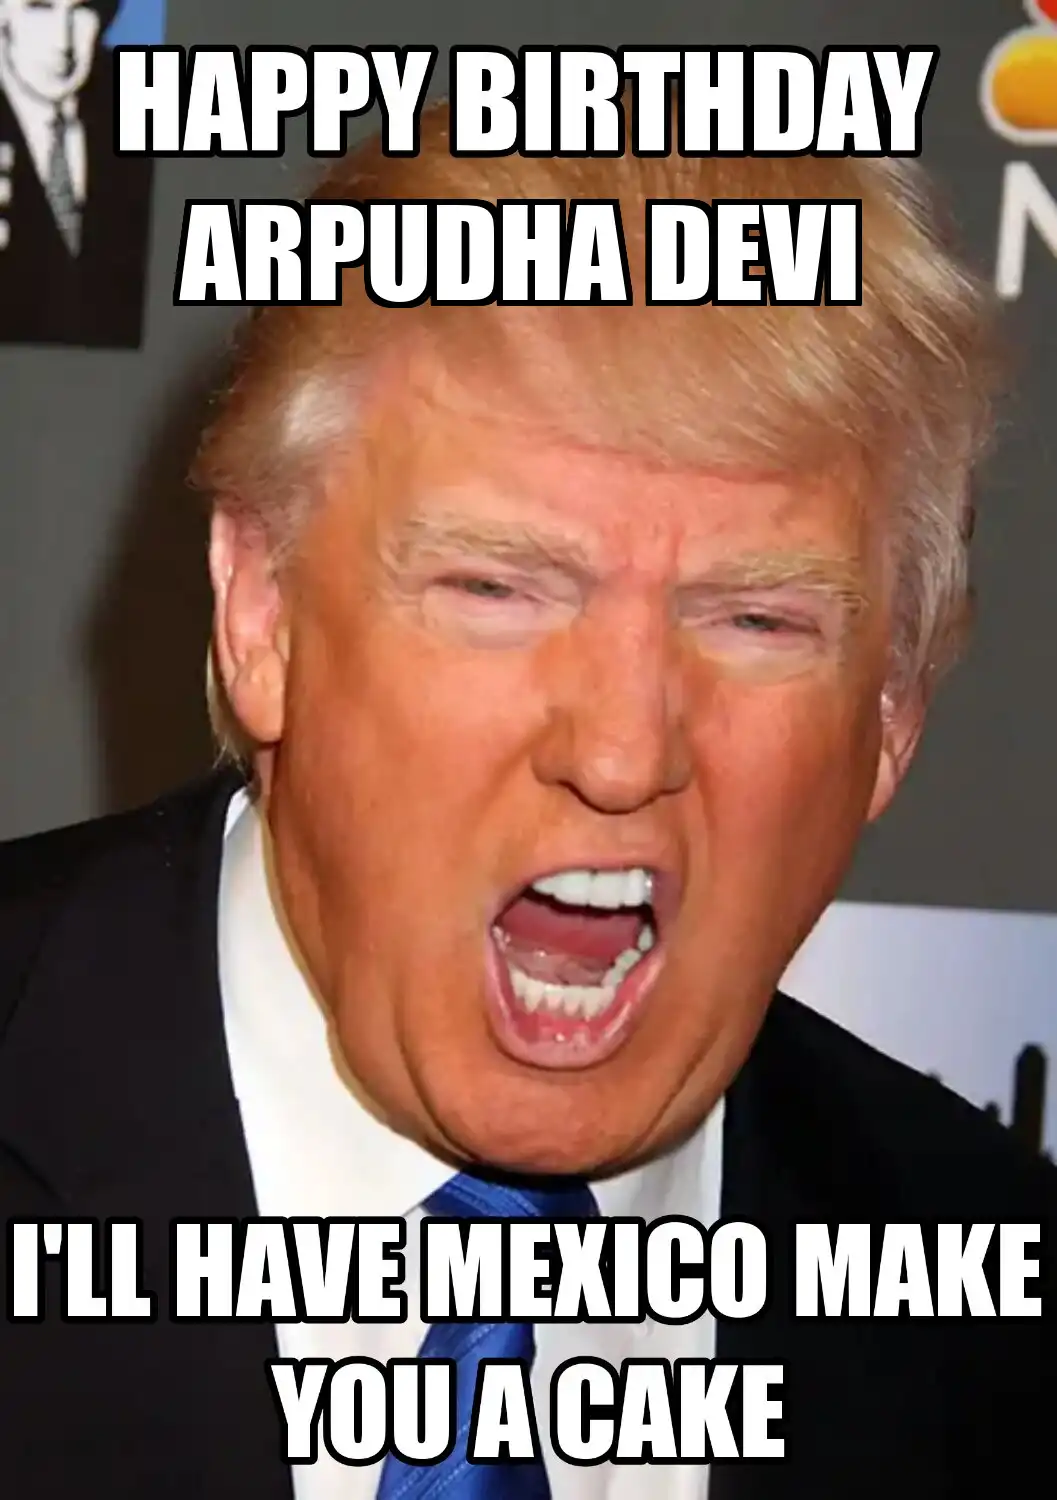 Happy Birthday Arpudha devi Mexico Make You A Cake Meme